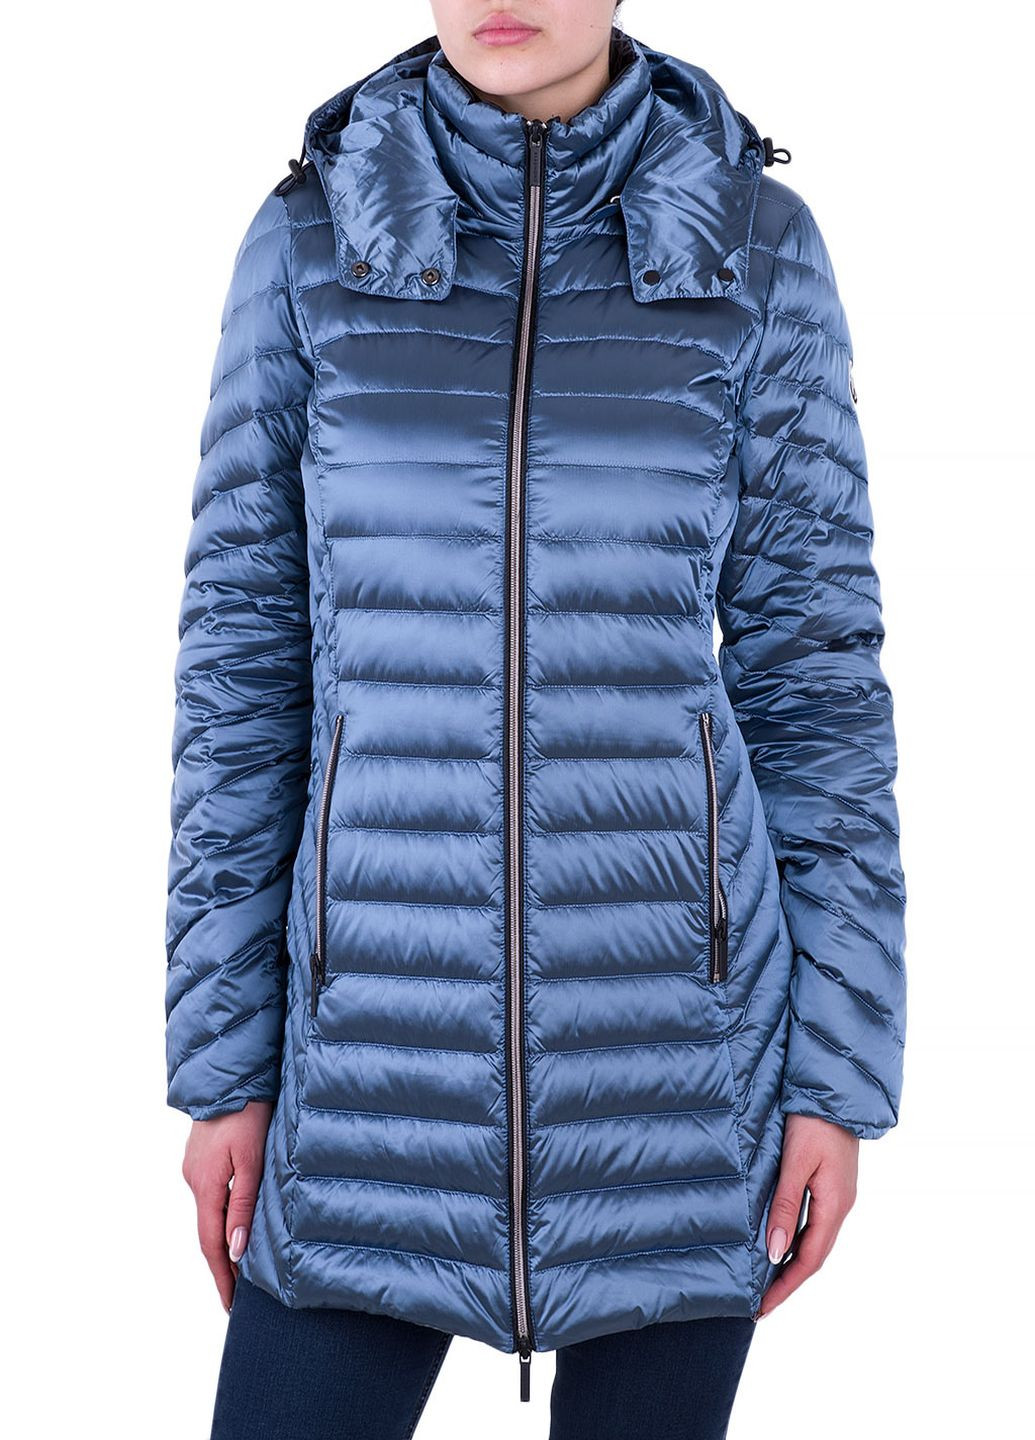 Синя зимня куртка Beaumont